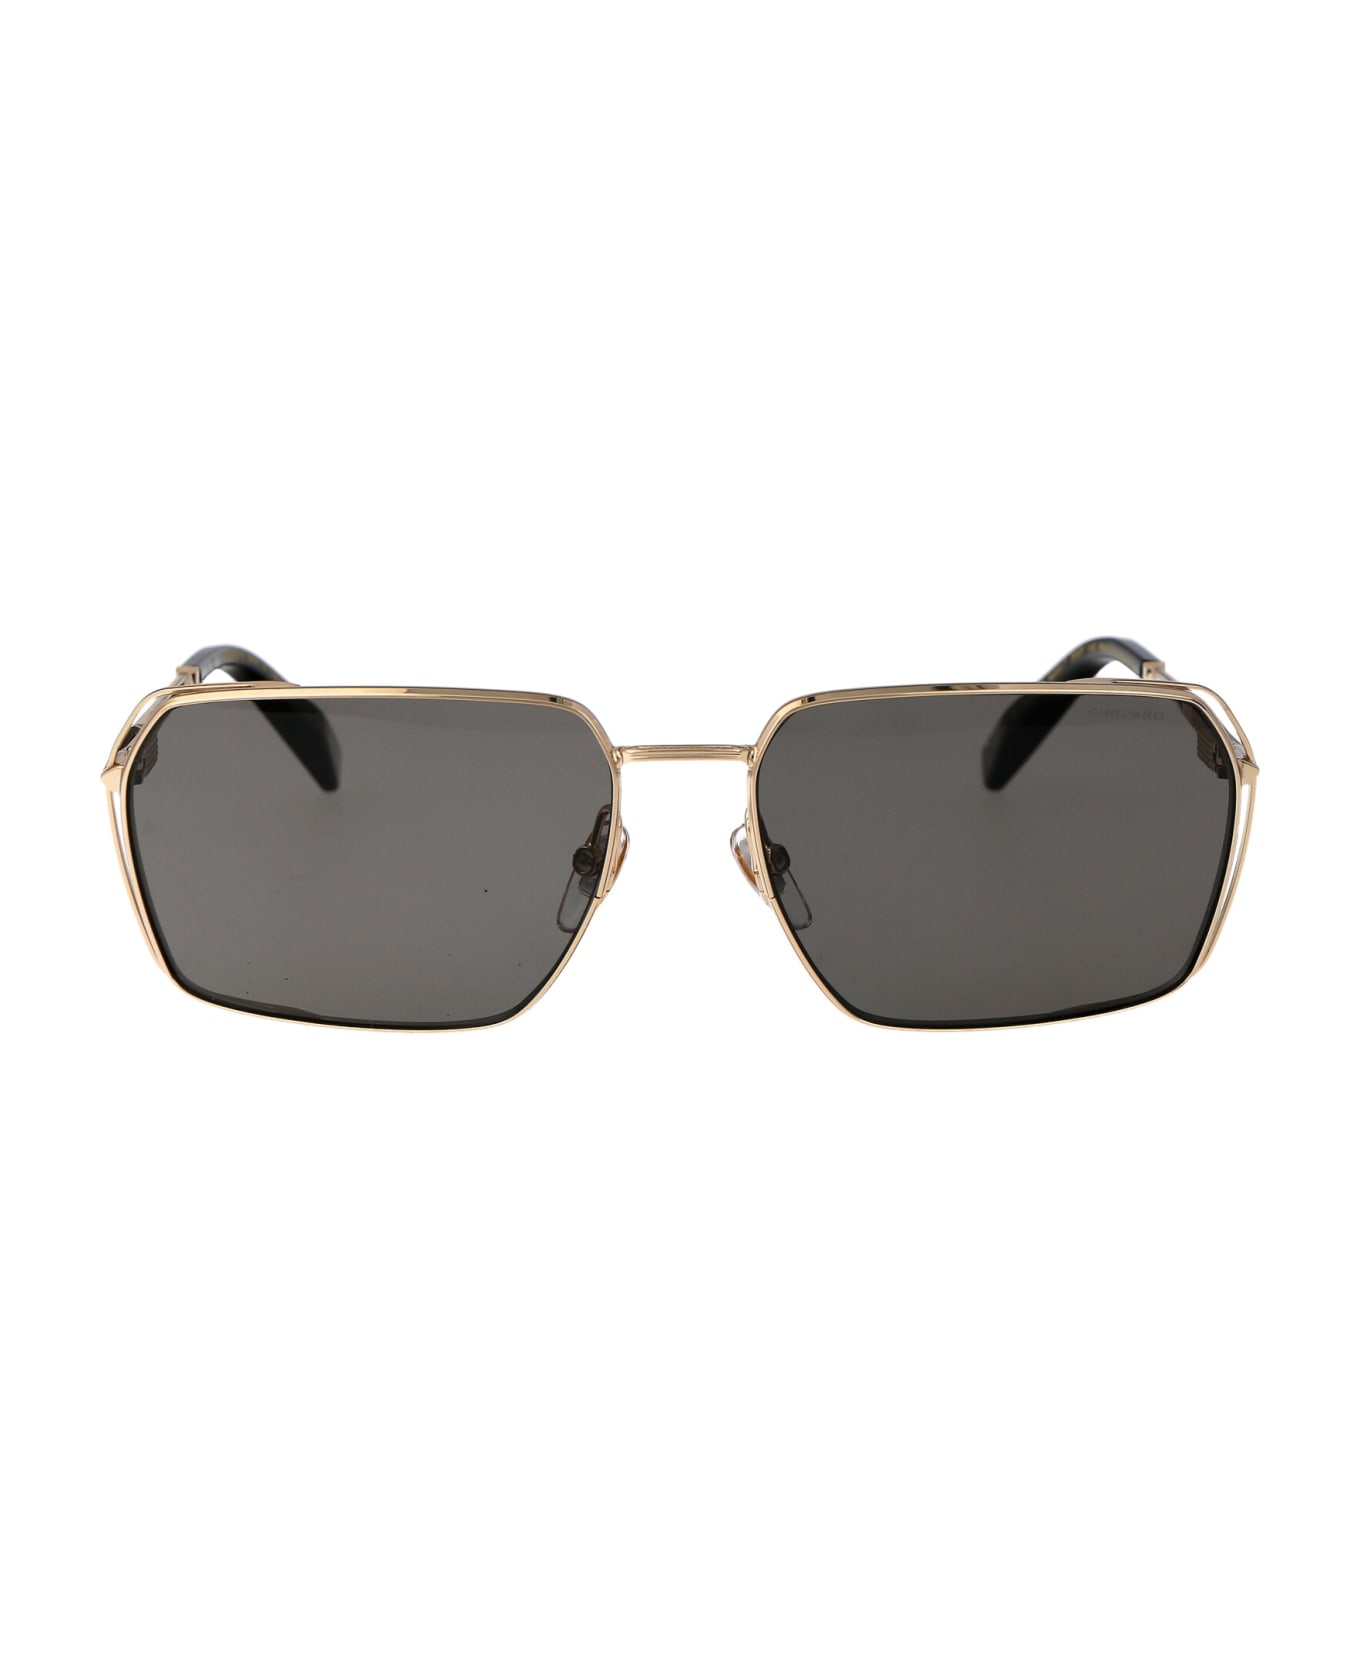 Chopard Schg90 Sunglasses - 300P GOLD サングラス